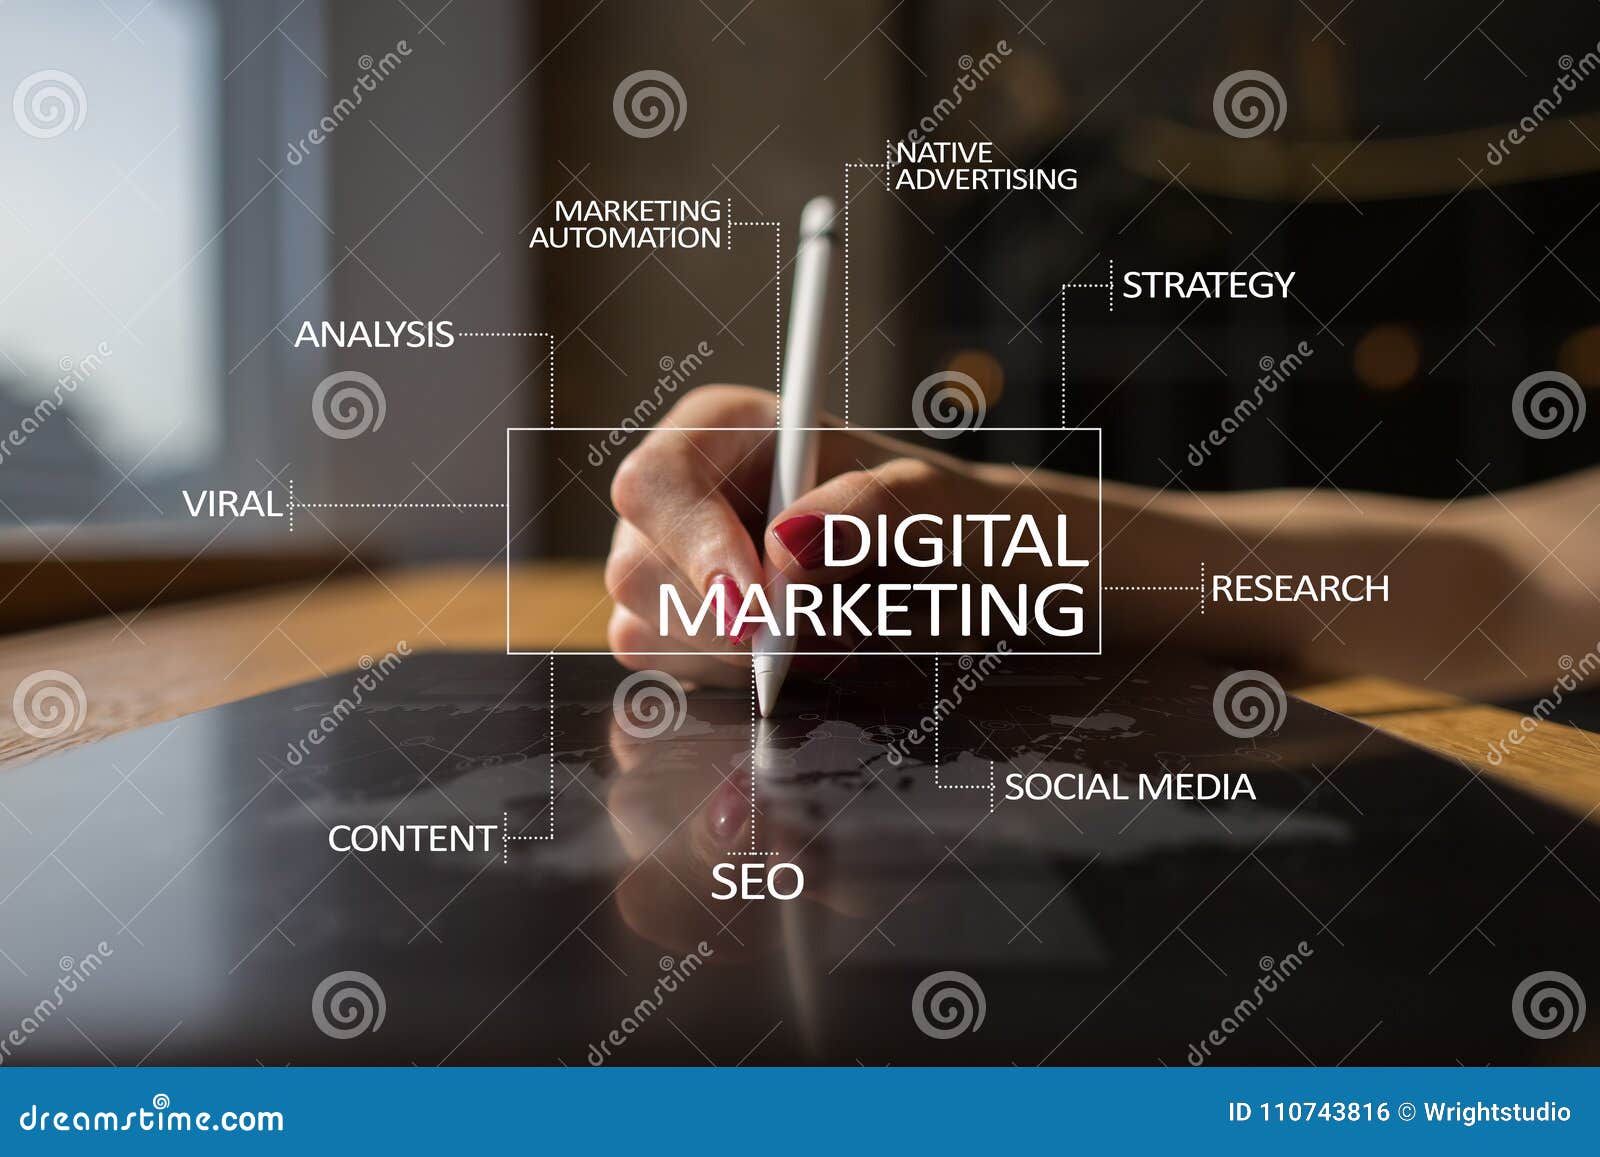 digital marketing technology concept. internet. online. search engine optimisation. seo. smm. advertising.